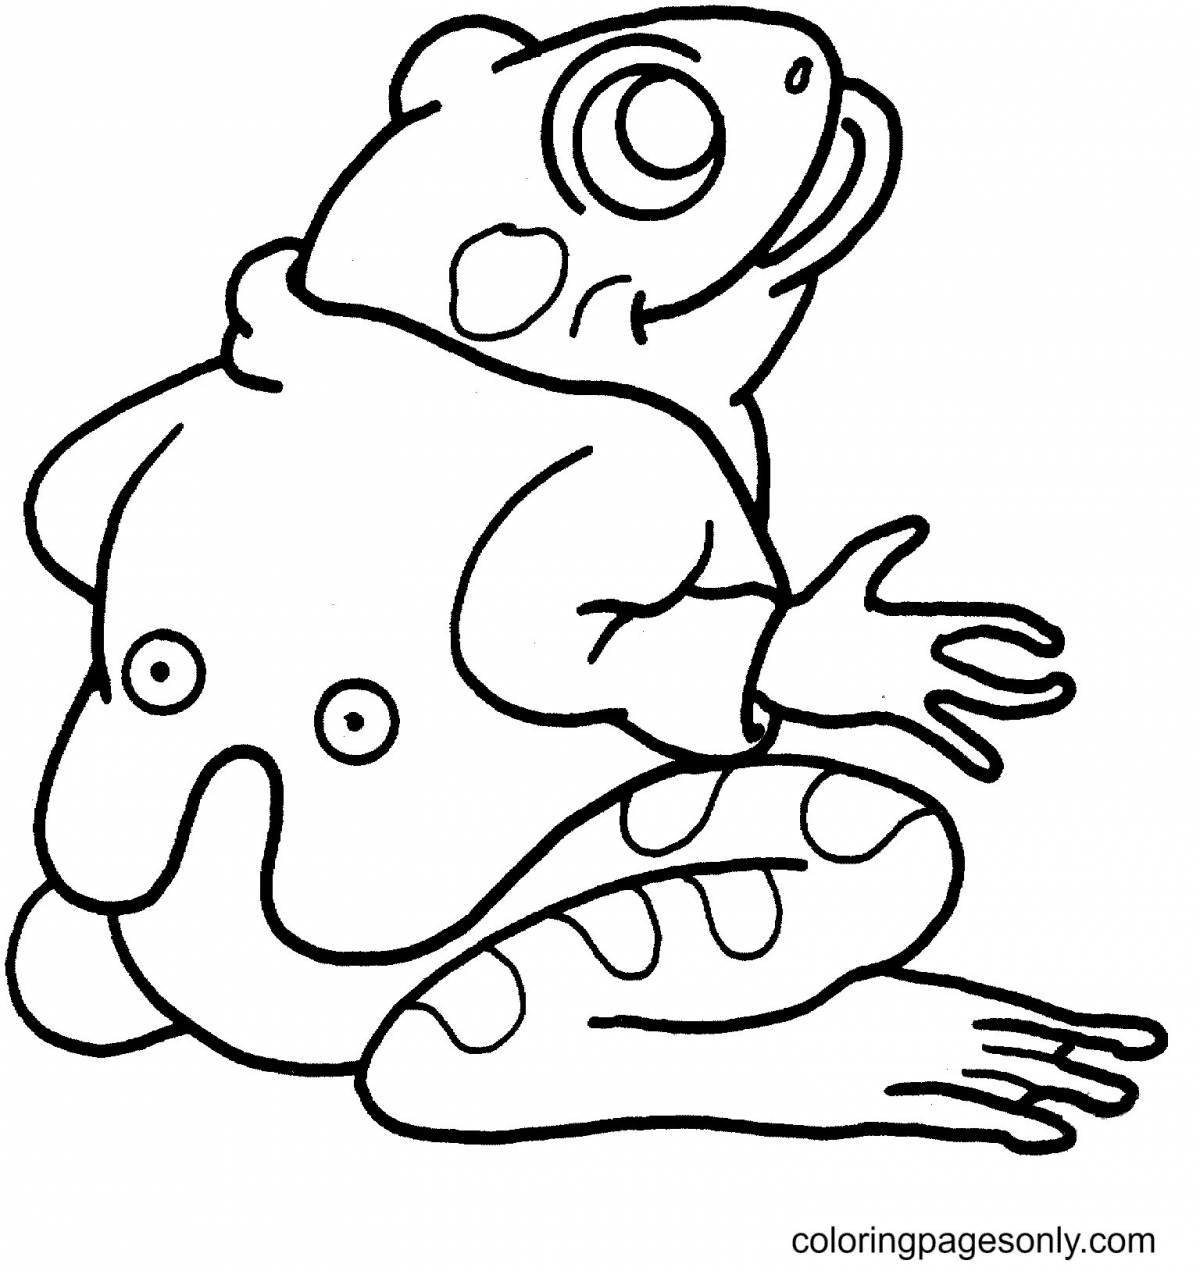 Joyful cartoon frog coloring book